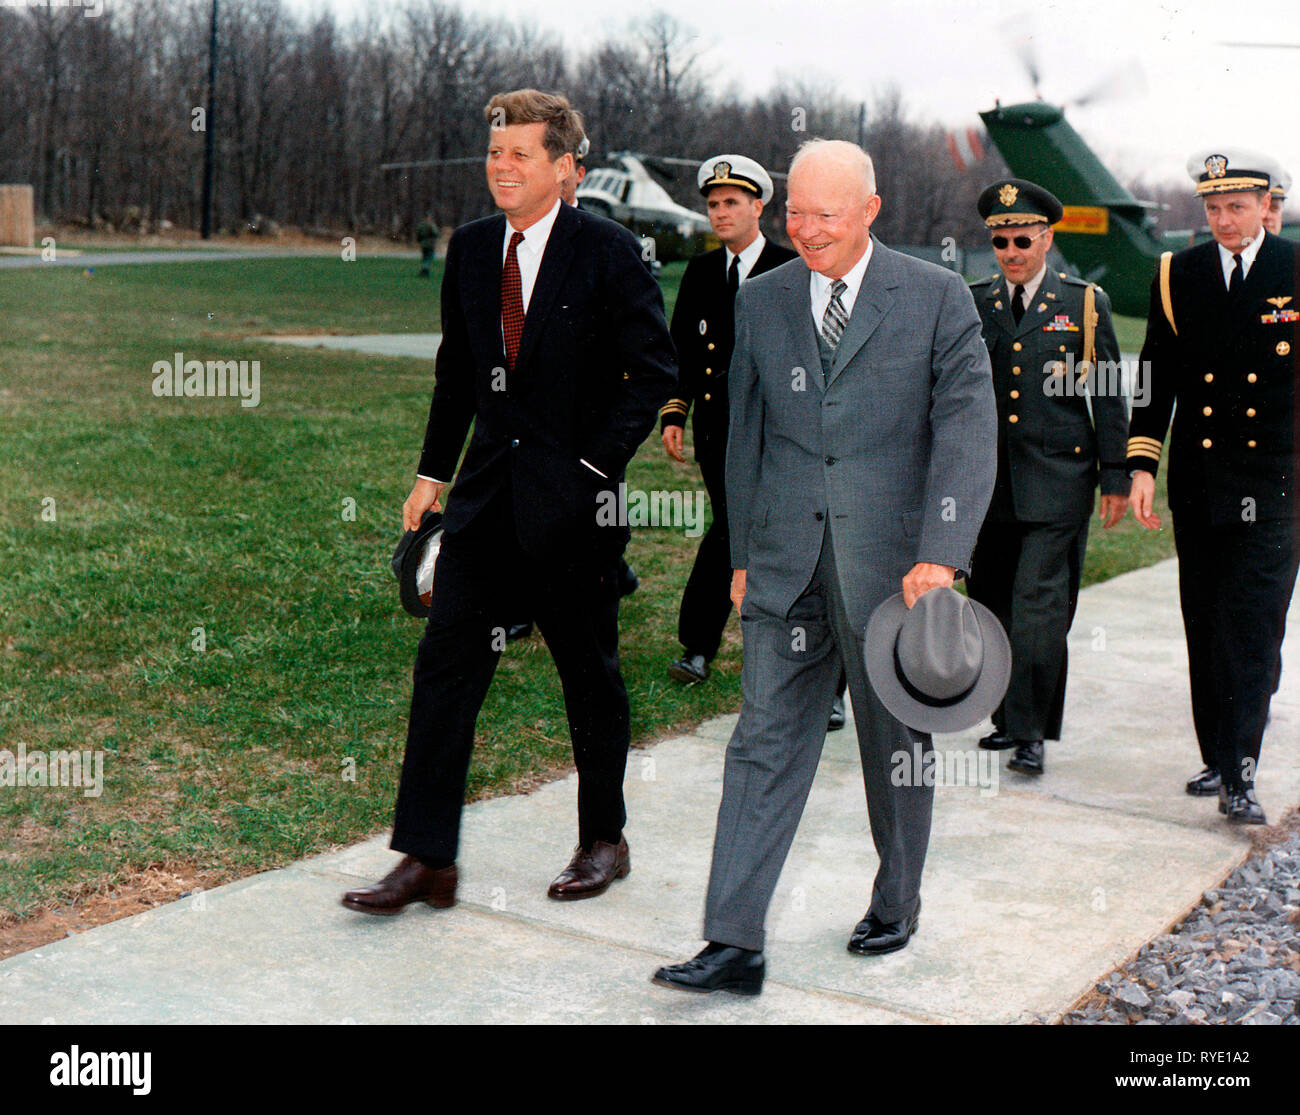 Treffen mit Präsident Eisenhower. Präsident Kennedy, Präsident Eisenhower, militärischen Adjutanten. Camp David, MD - April 1961 Stockfoto